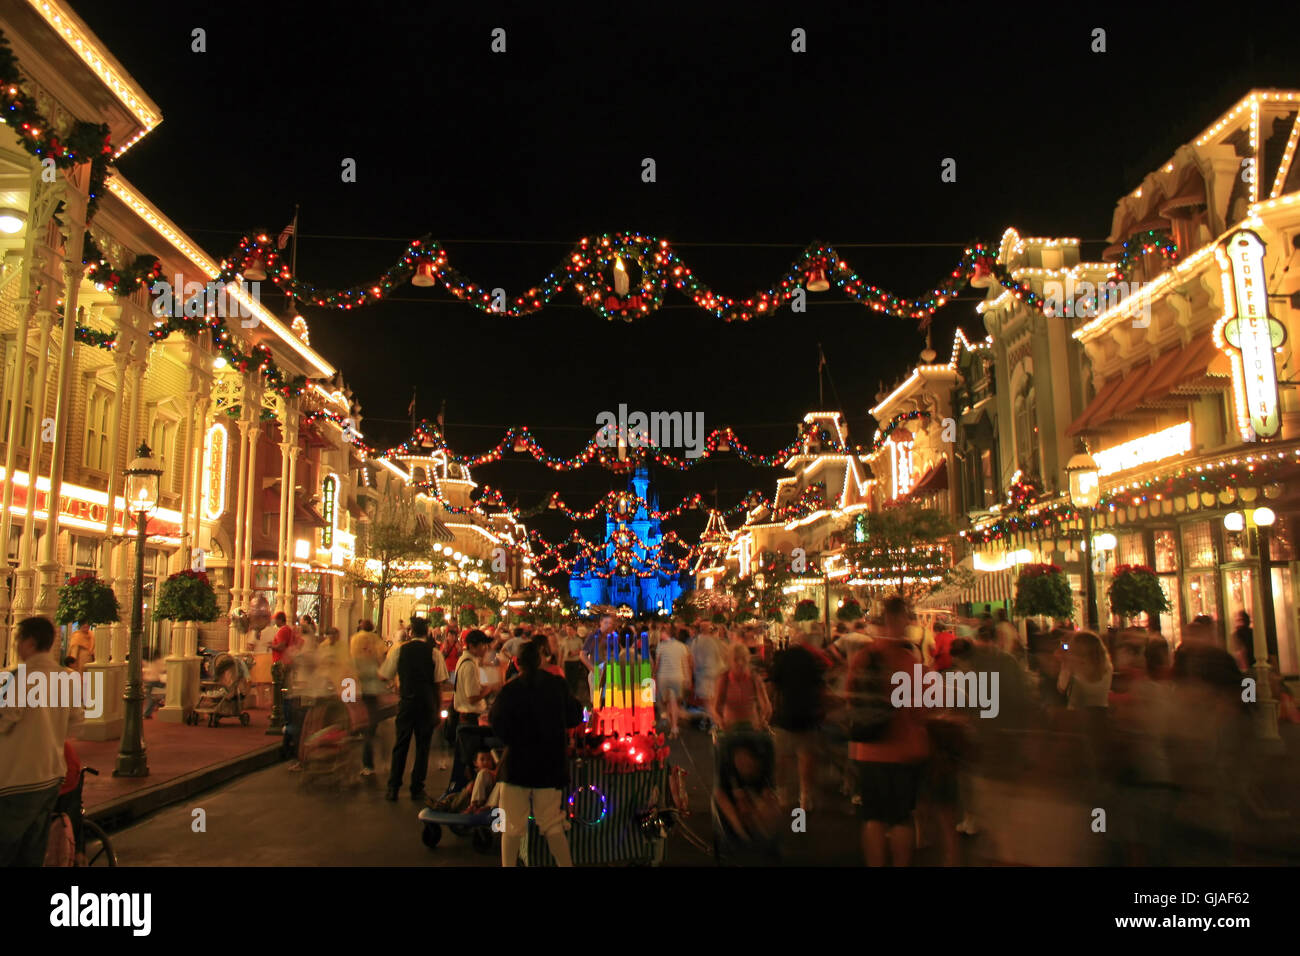 Orlando, Florida. January 3rd, 2007. Main Street USA at Magic Kingdom at Walt Disney World with Christmas Decorations. Stock Photo